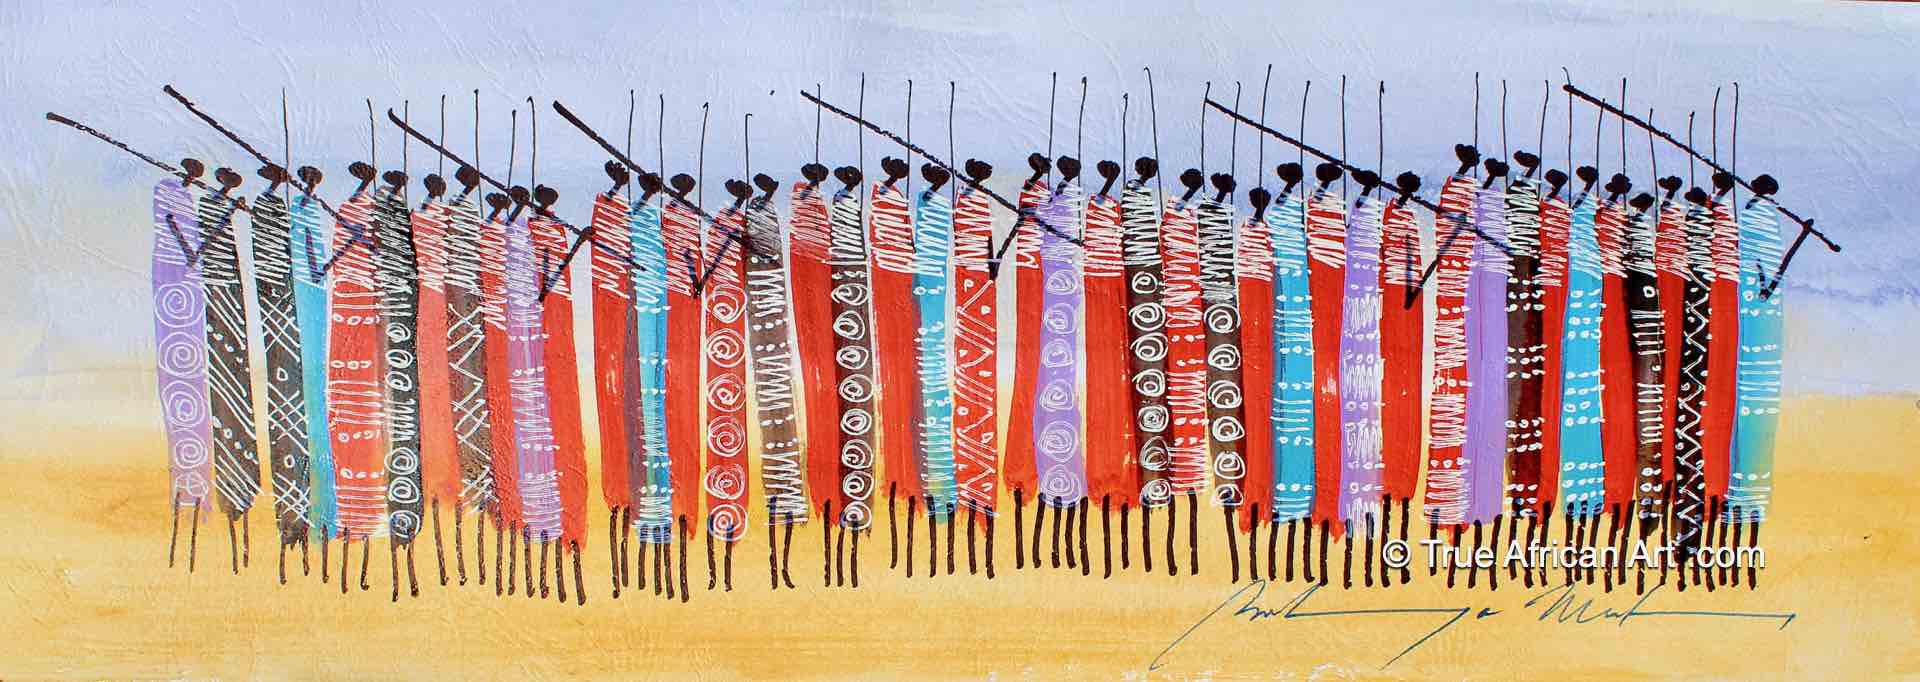 Martin Bulinya | Kenya | “B-643” | Original | True African Art .com